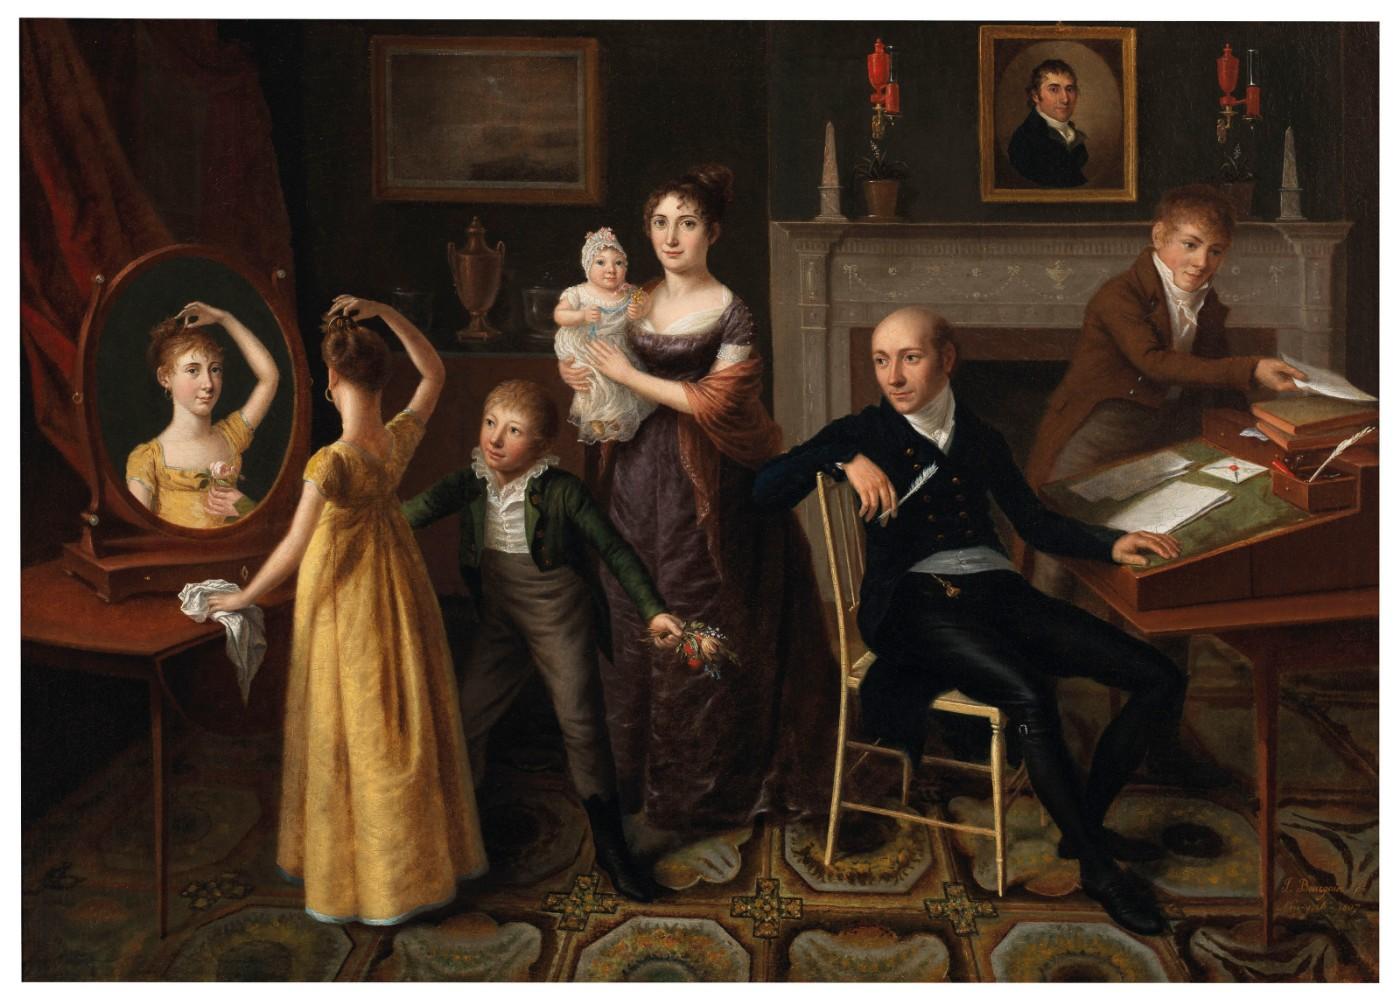 Francois-Joseph Bourgoin (active 1762-1817), Family Group in a New York Interior, 1807